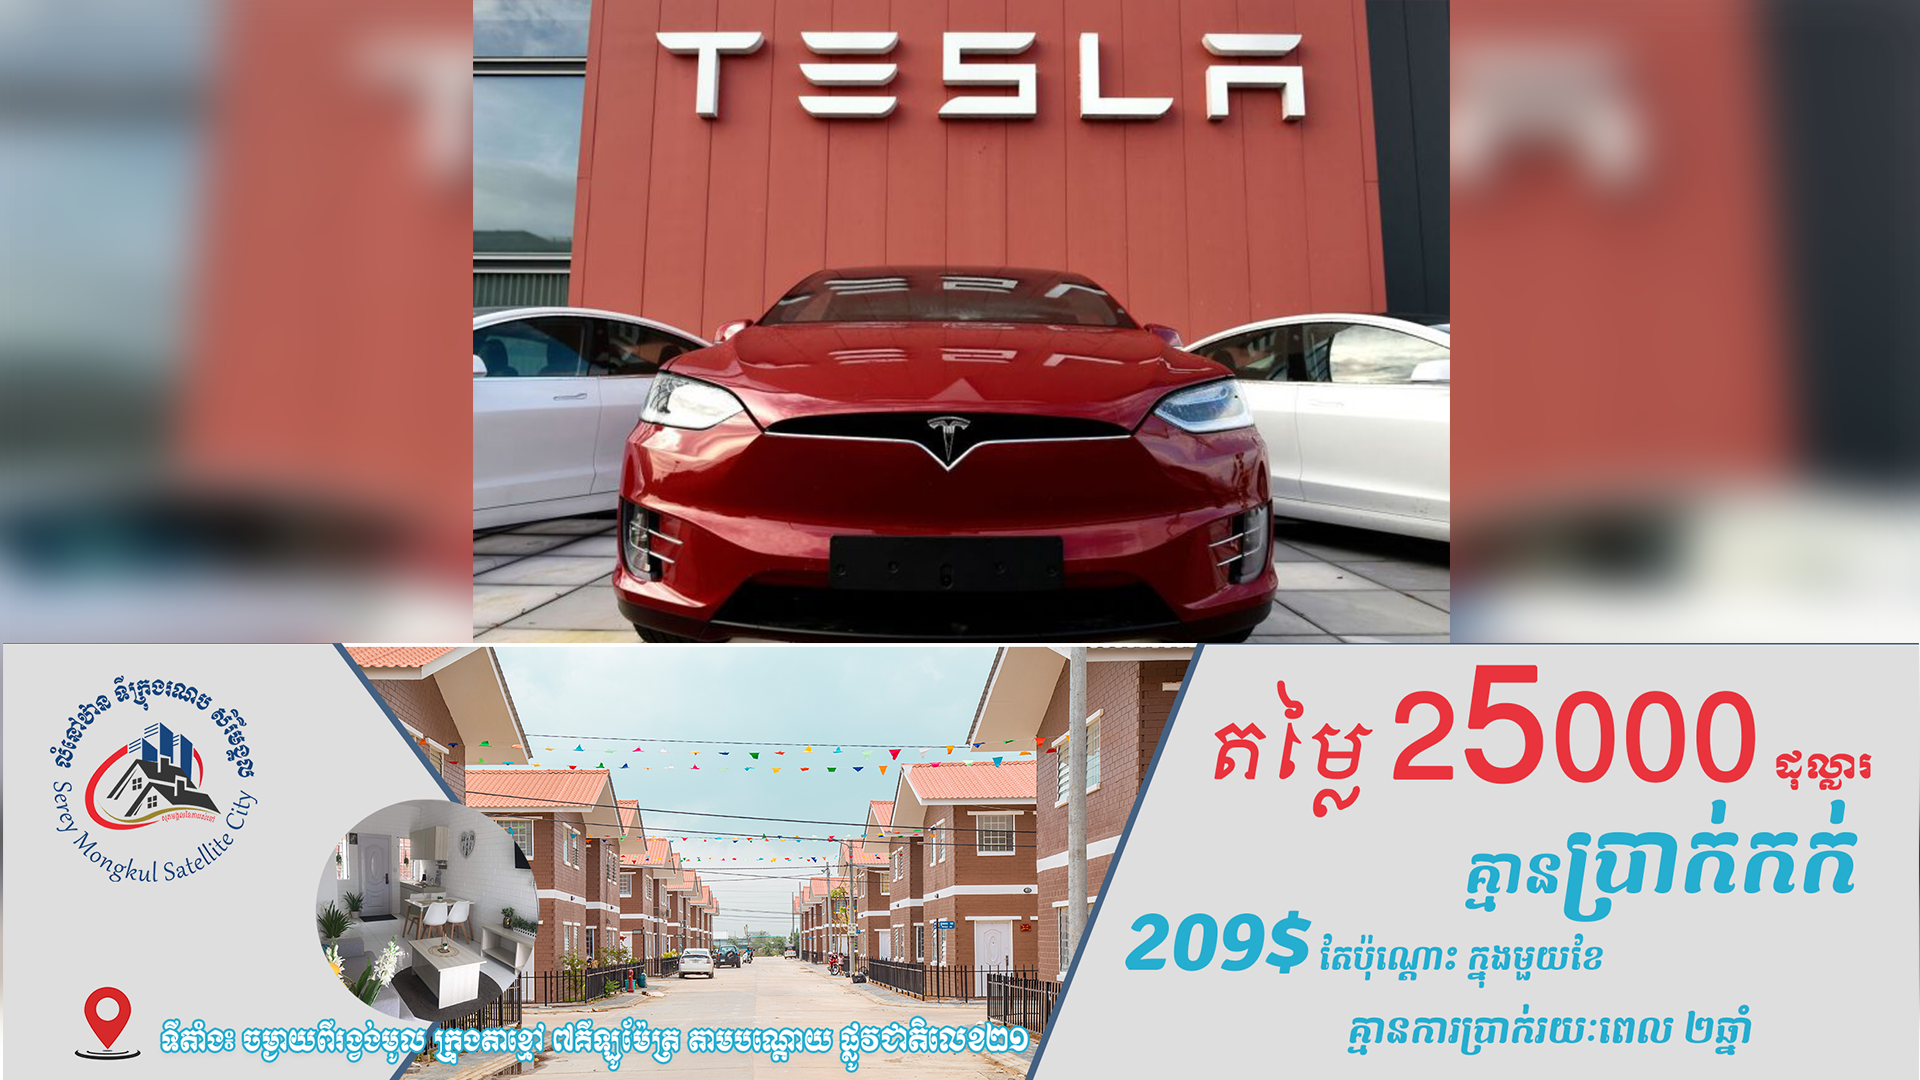 Tesla posts new job ads, signalling entry to Singapore